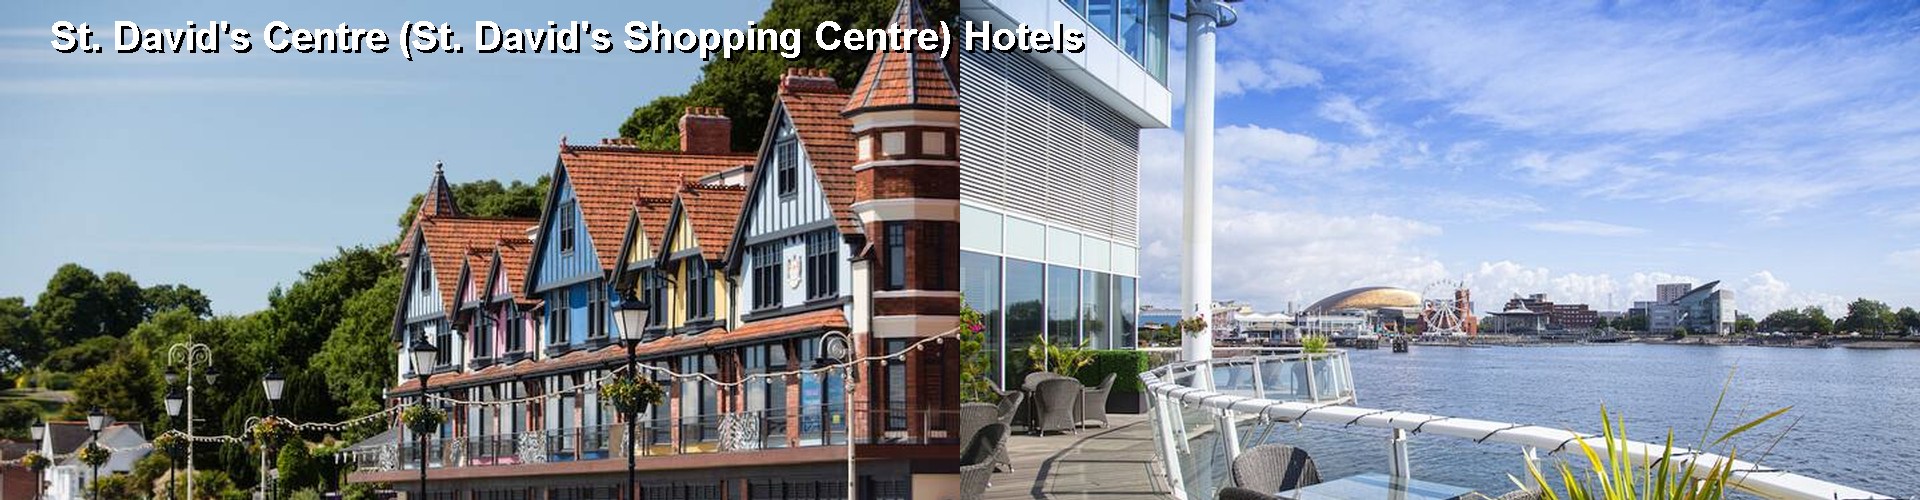 2 Best Hotels near St. David's Centre (St. David's Shopping Centre)